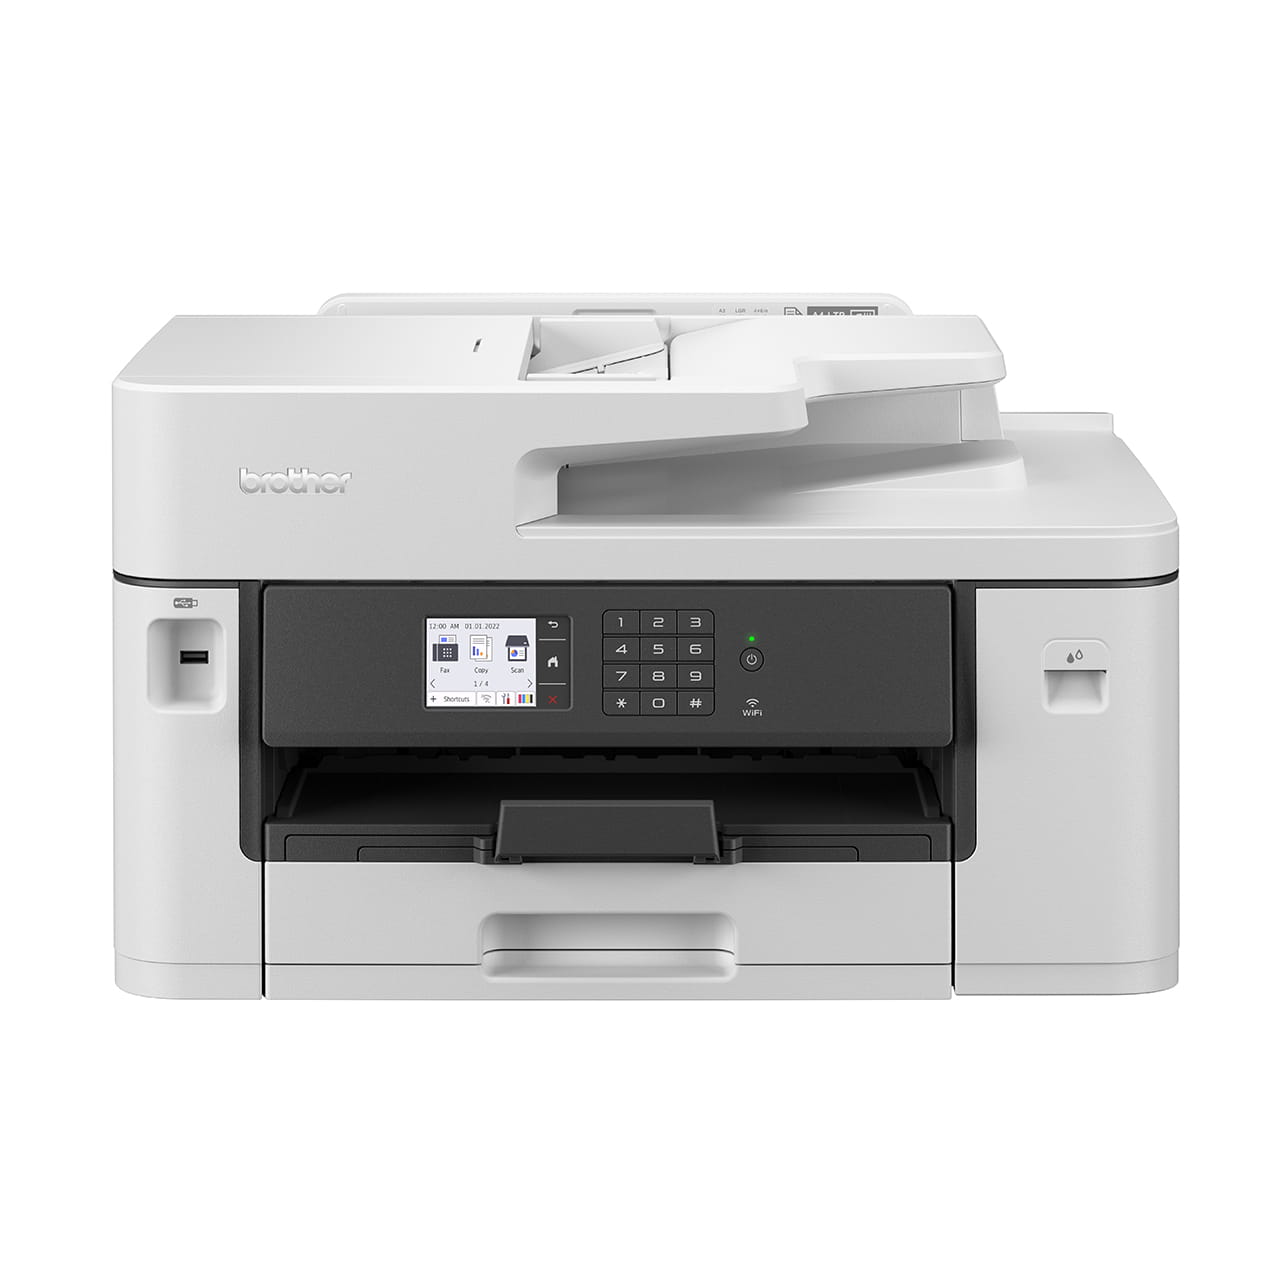 MFC-J2340DW A3 Business Printer